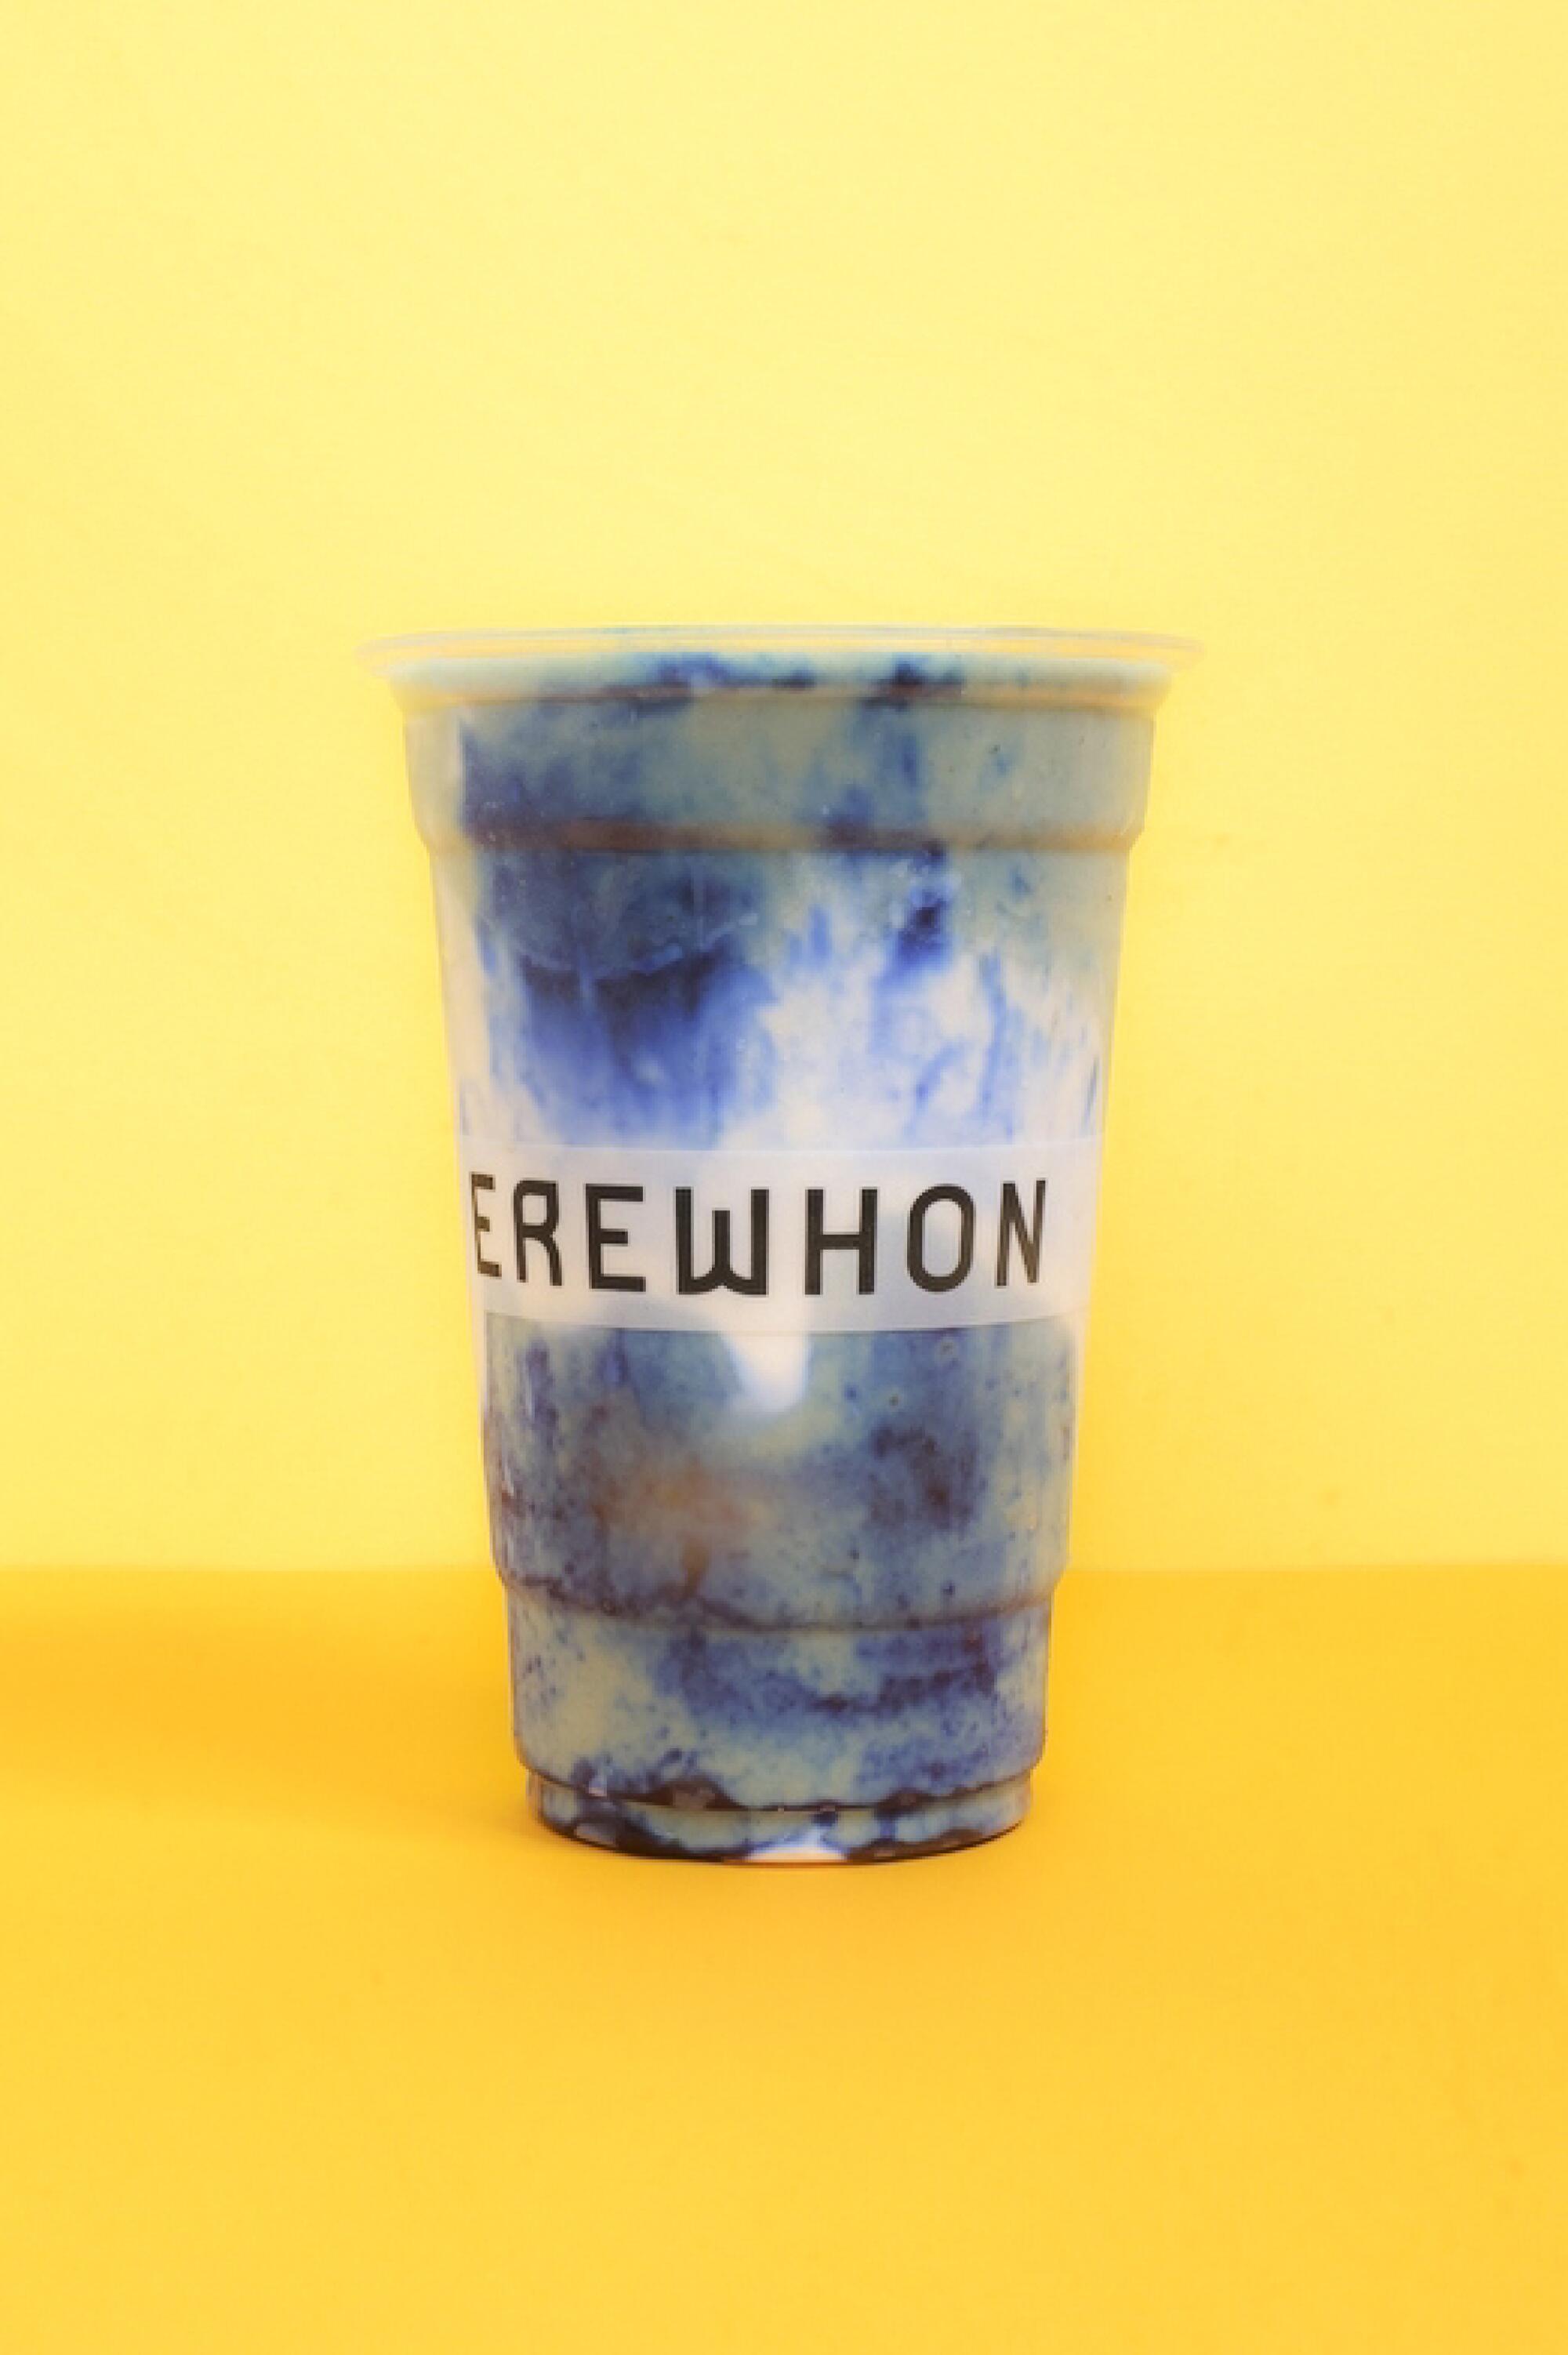 A blue-sky drink: Erewhon's Coconut Cloud smoothie.